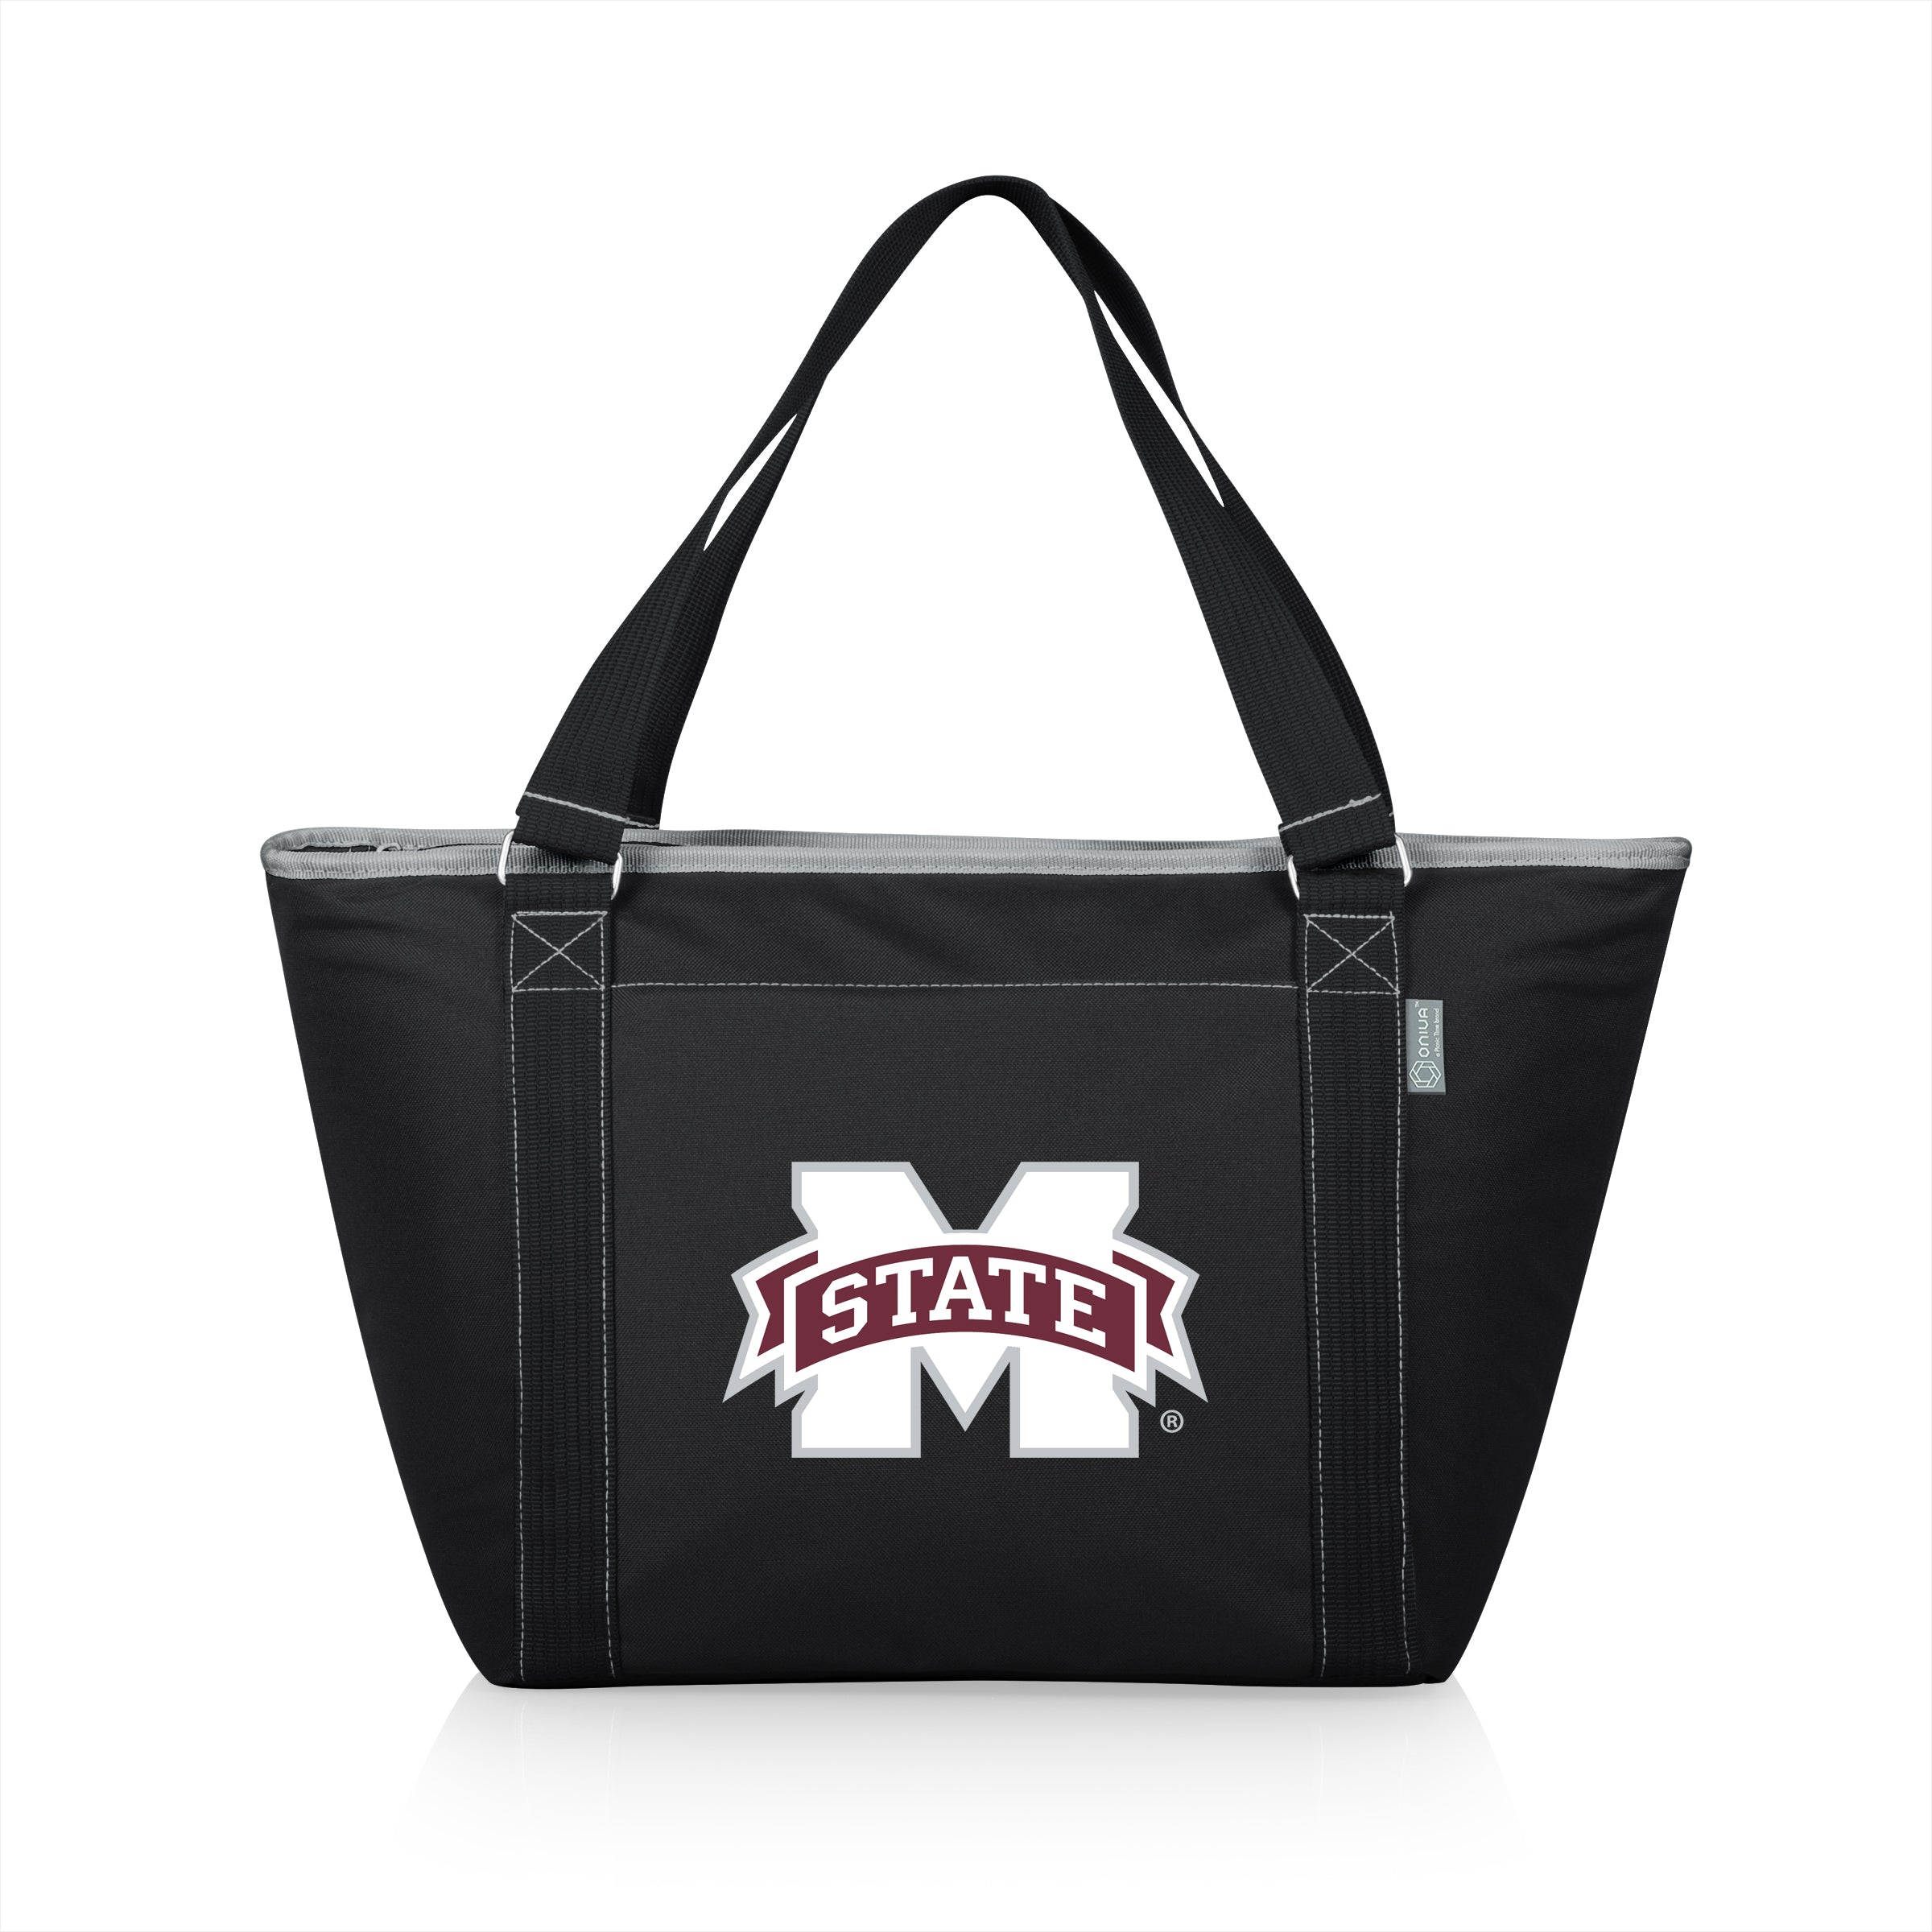 Mississippi State Bulldogs - Topanga Cooler Tote Bag